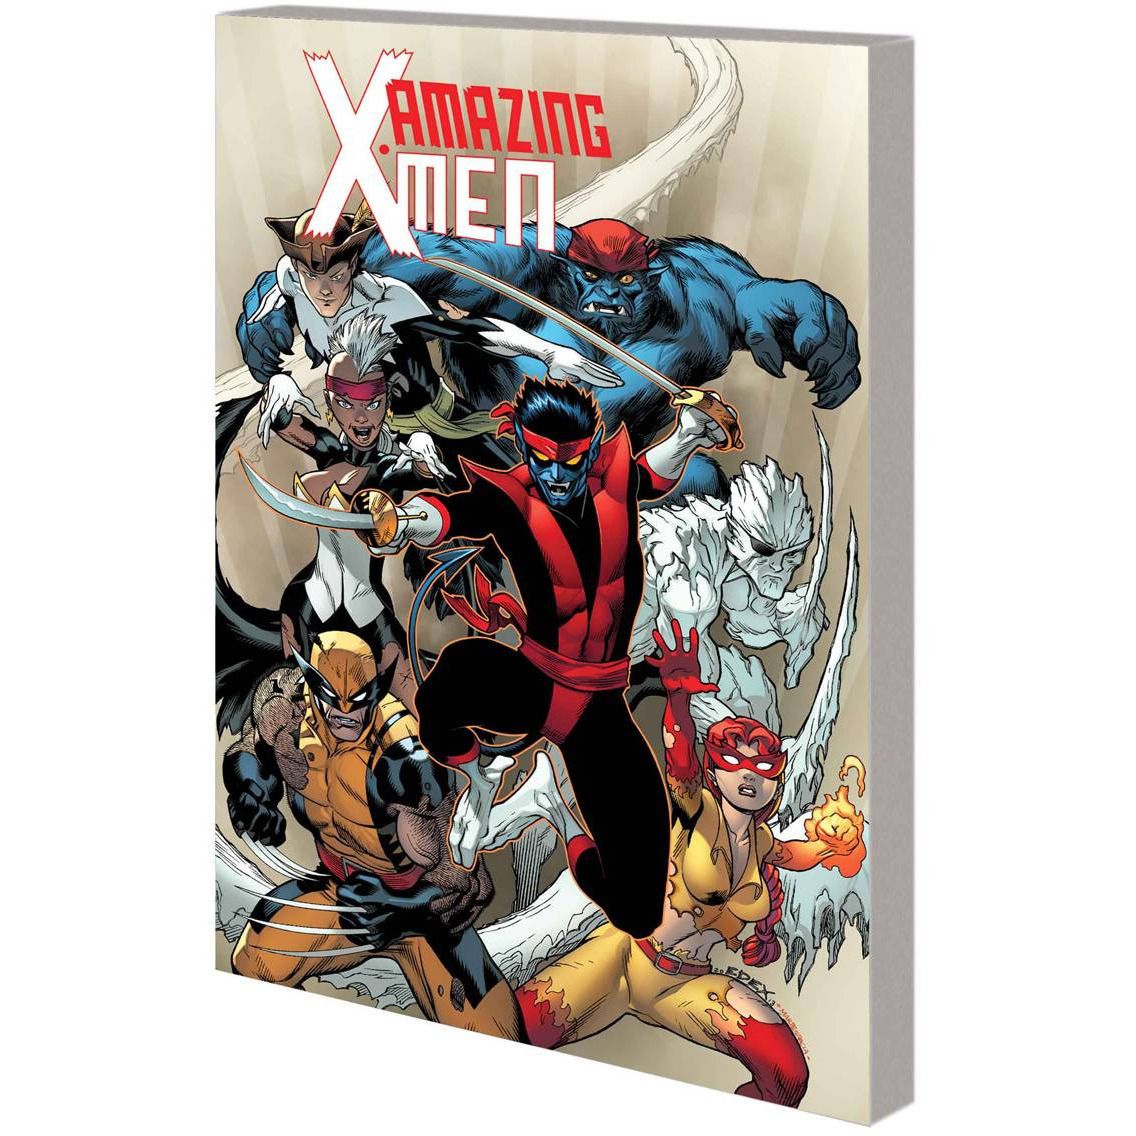  Amazing X-Men The Quest for Nightcrawler Vol. 1 TP Uncanny!